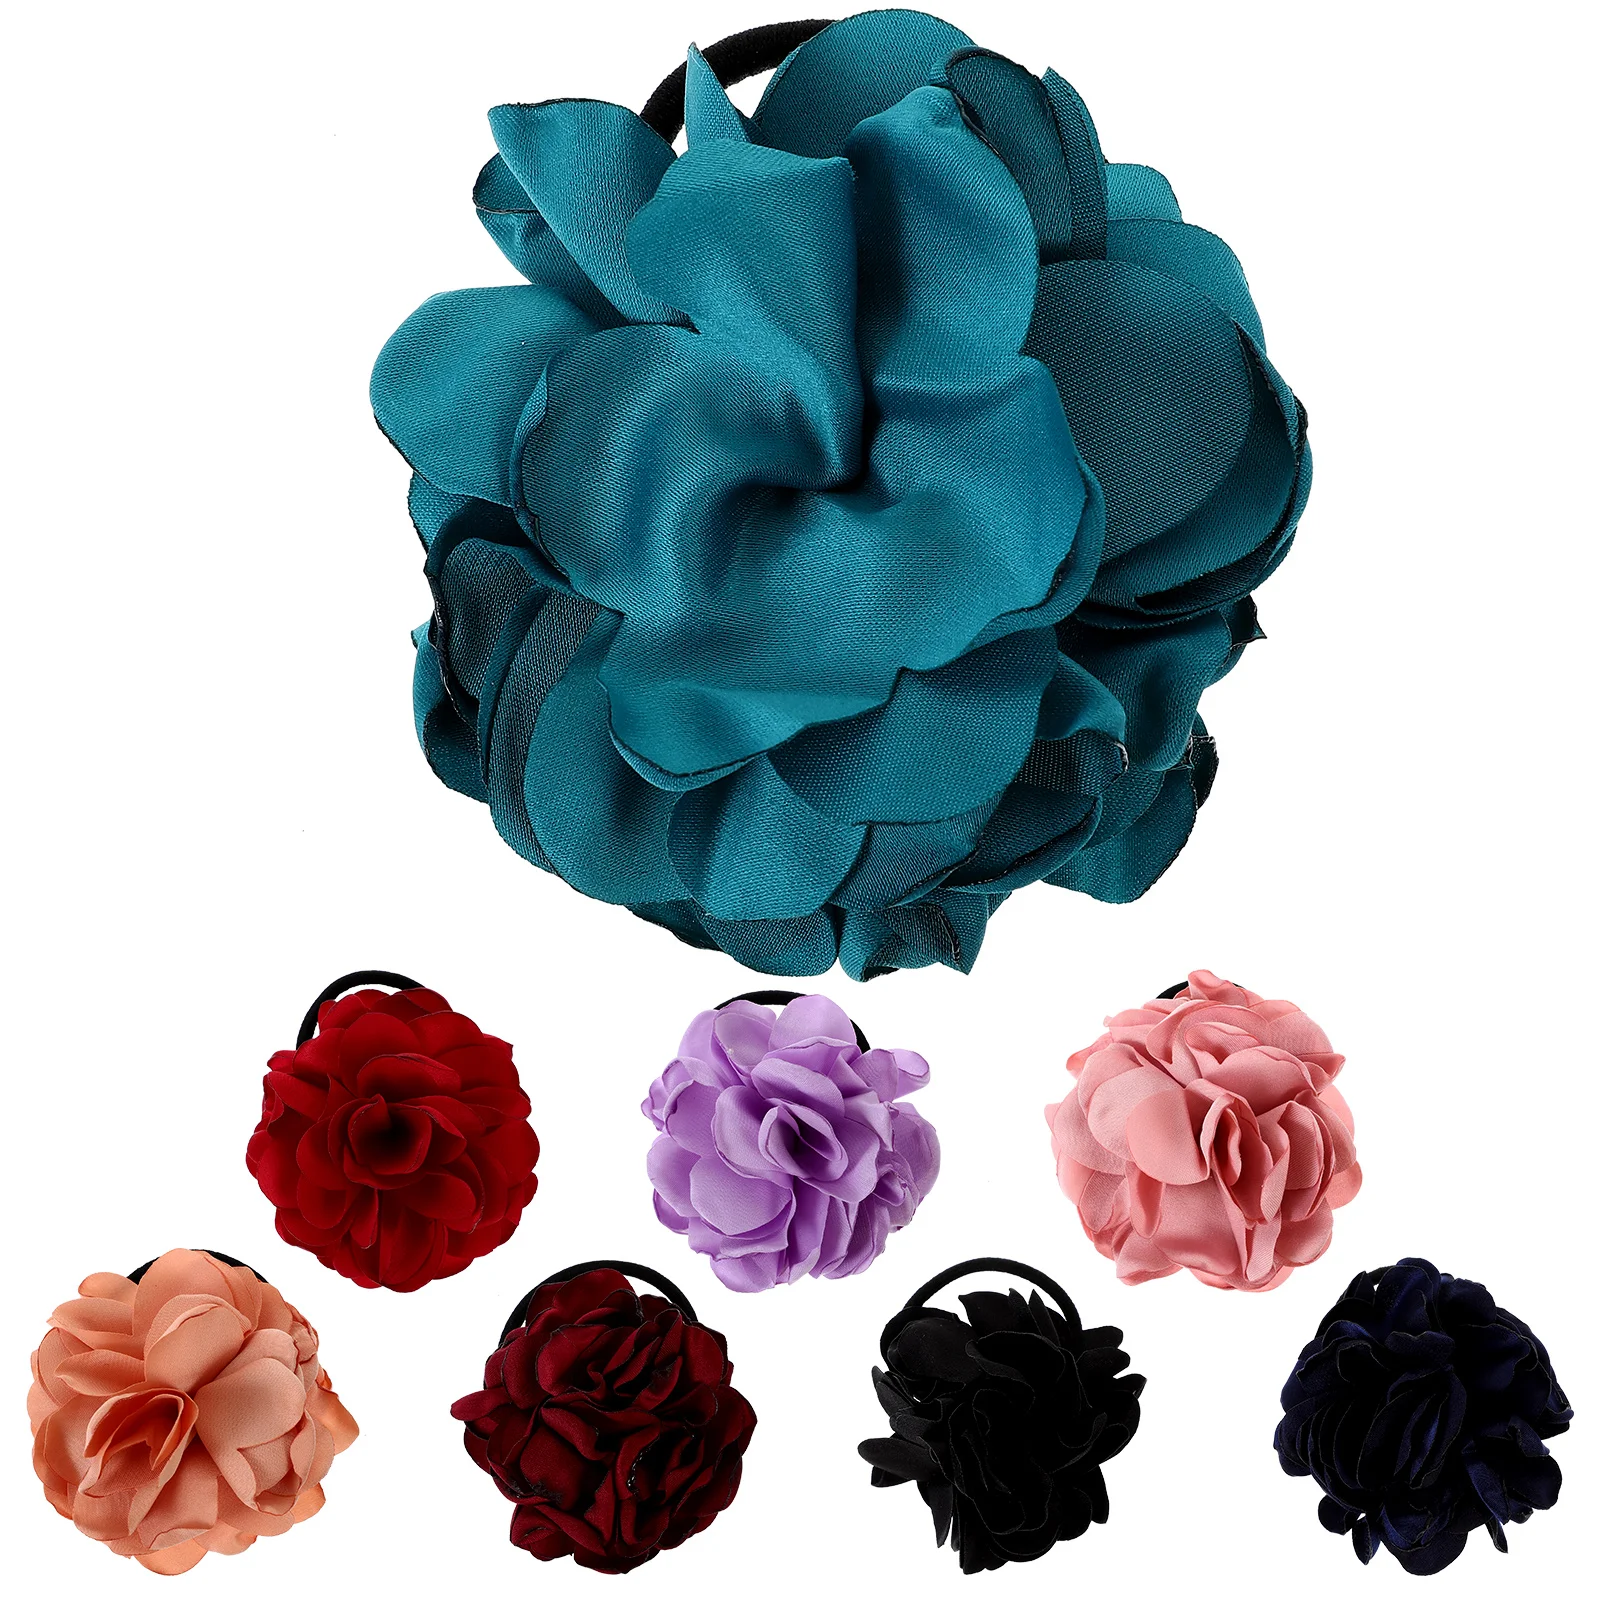 

8 Pcs Artificial Flower Hair Tie Girls Headdress Tiara Ring Elastic Ties Cloth Ponytail Holders for Miss Ribbons